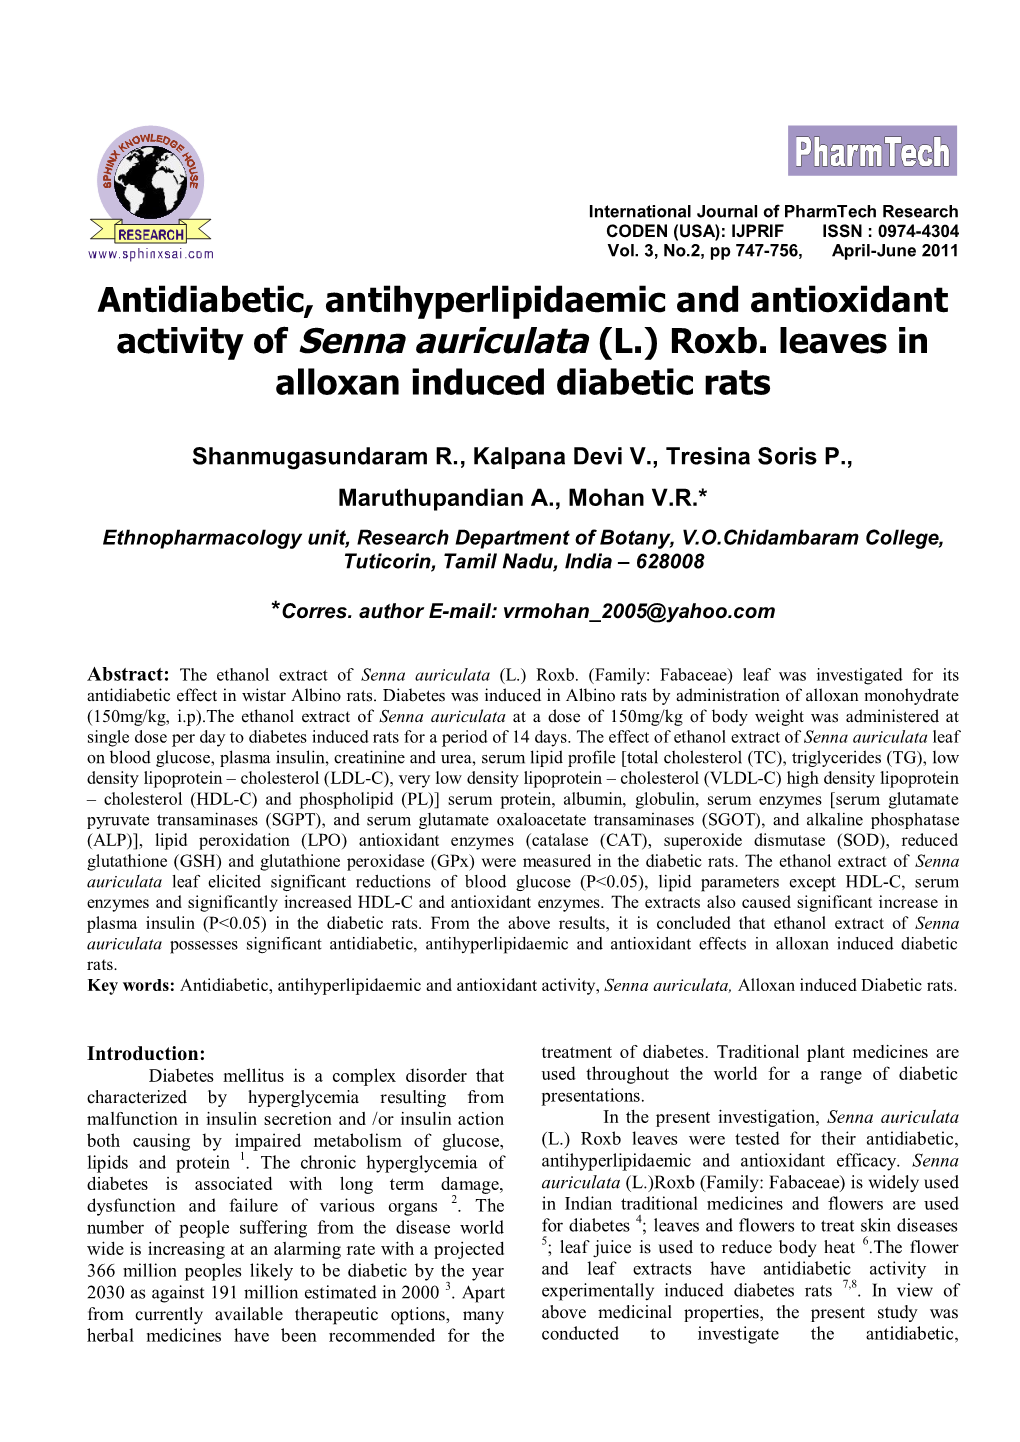 Antidiabetic, Antihyperlipidaemic and Antioxidant Activity of Senna Auriculata (L.) Roxb